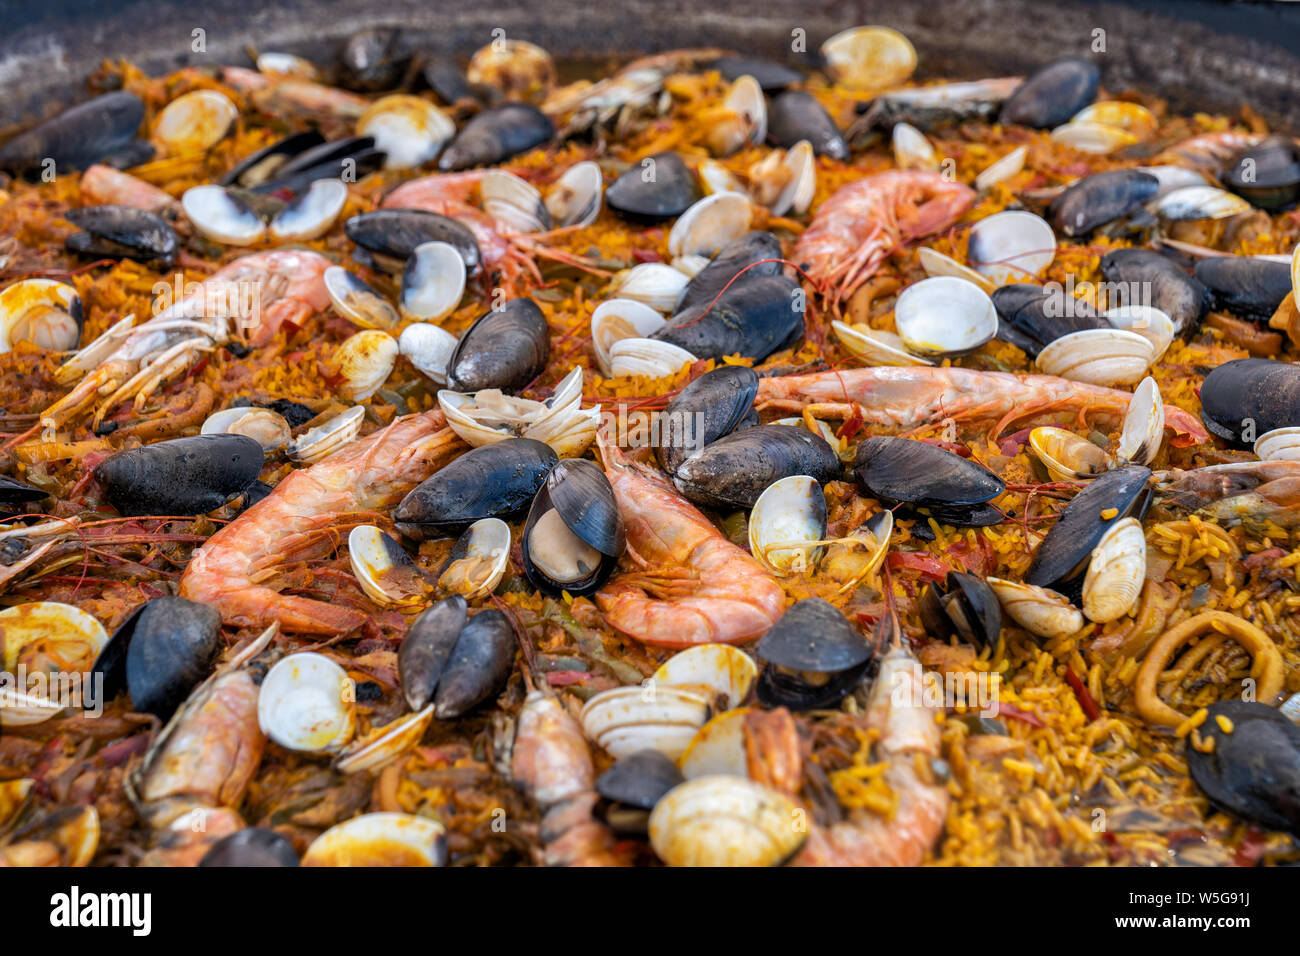 Paella de Marisco seafood with Hispanic rice, prawns, mussels, clams on large pan. Stock Photo